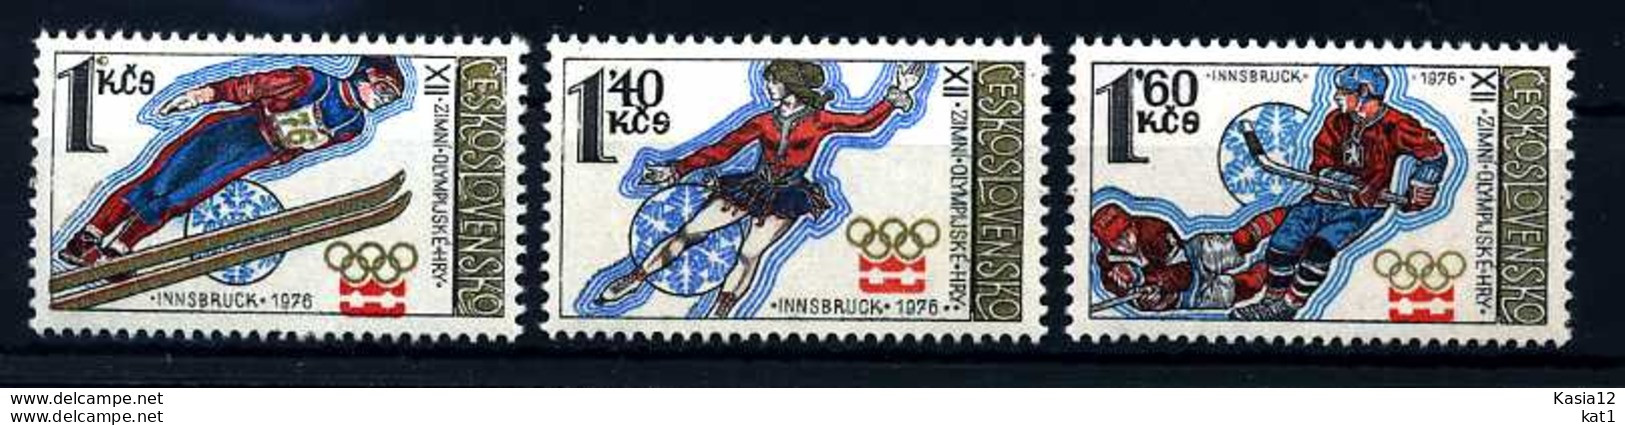 E08601)Olympia 76 CSSR 2305/7** - Winter 1976: Innsbruck